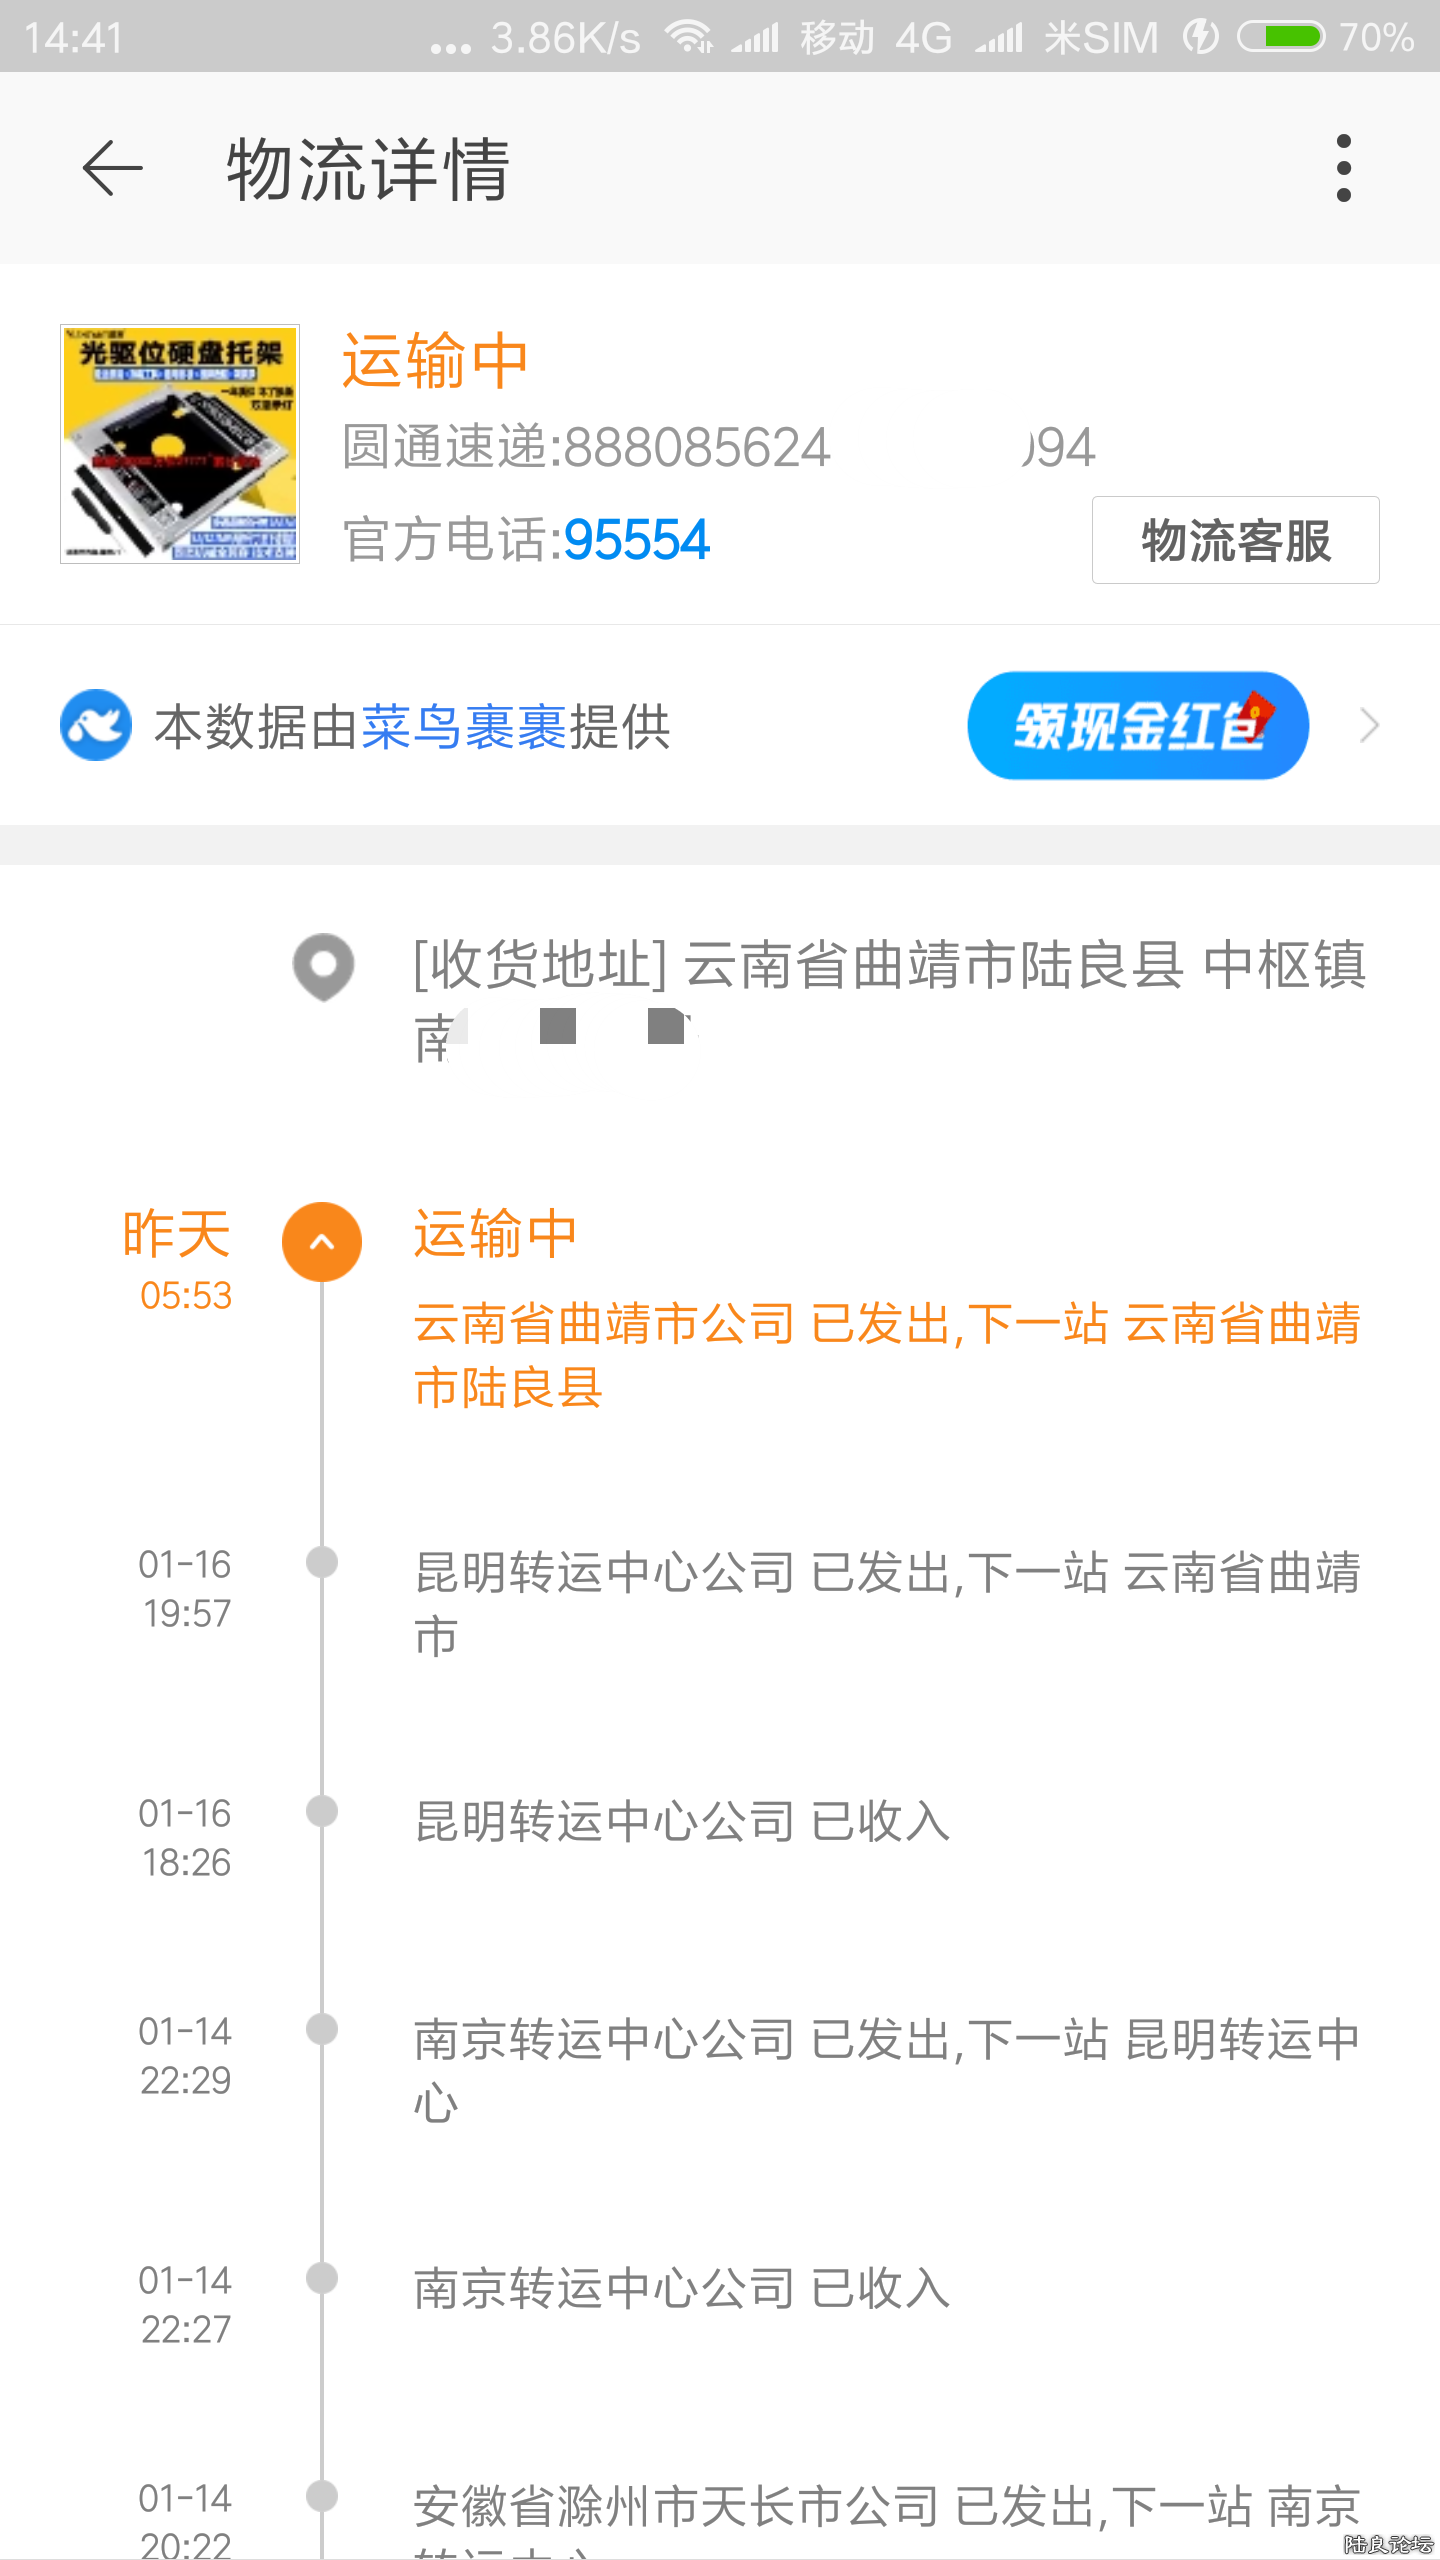 Screenshot_2018-01-18-14-41-38-886_com_1516257758376.taobao.taobao.png